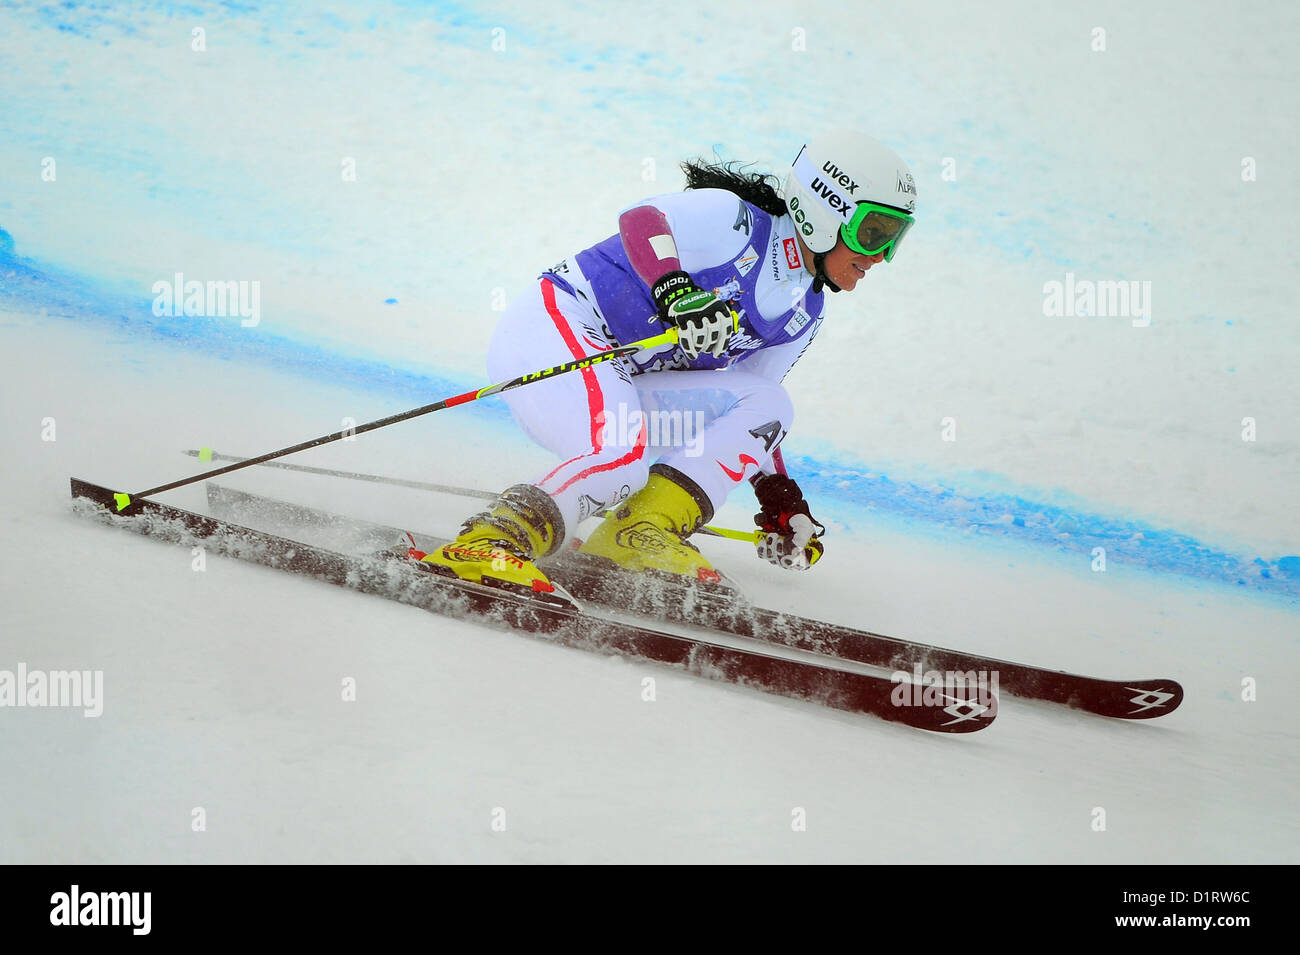 Audi FIS World Cup, Ladies Giant Slalom, Courchevel, France, 16.12.12. Austrian skier Stefanie Koehle. Stock Photo